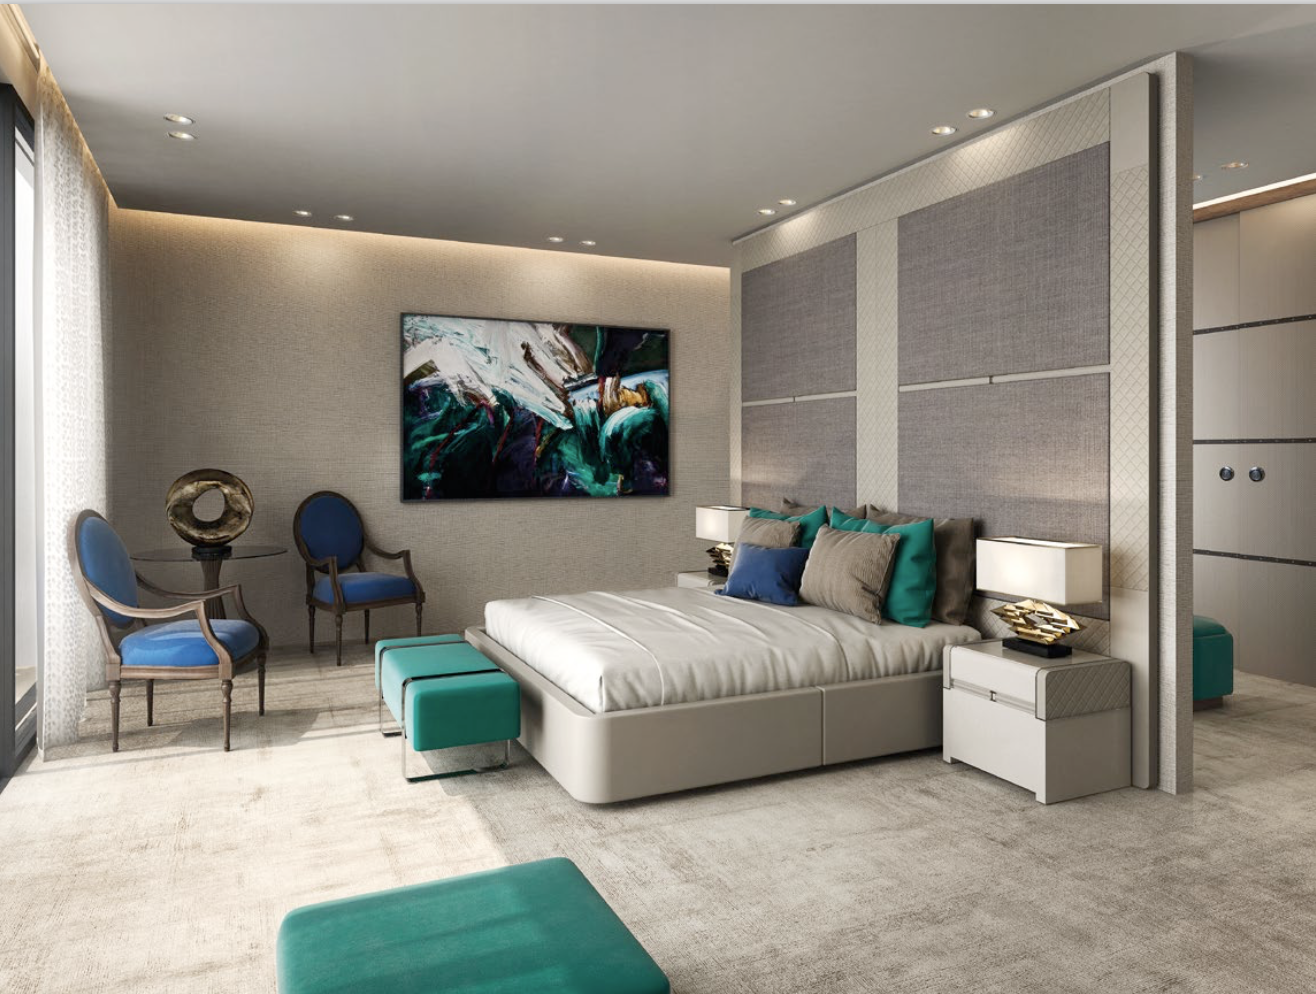 Interiorismo-Dormitorio-Cityliving-David-Long-Designs